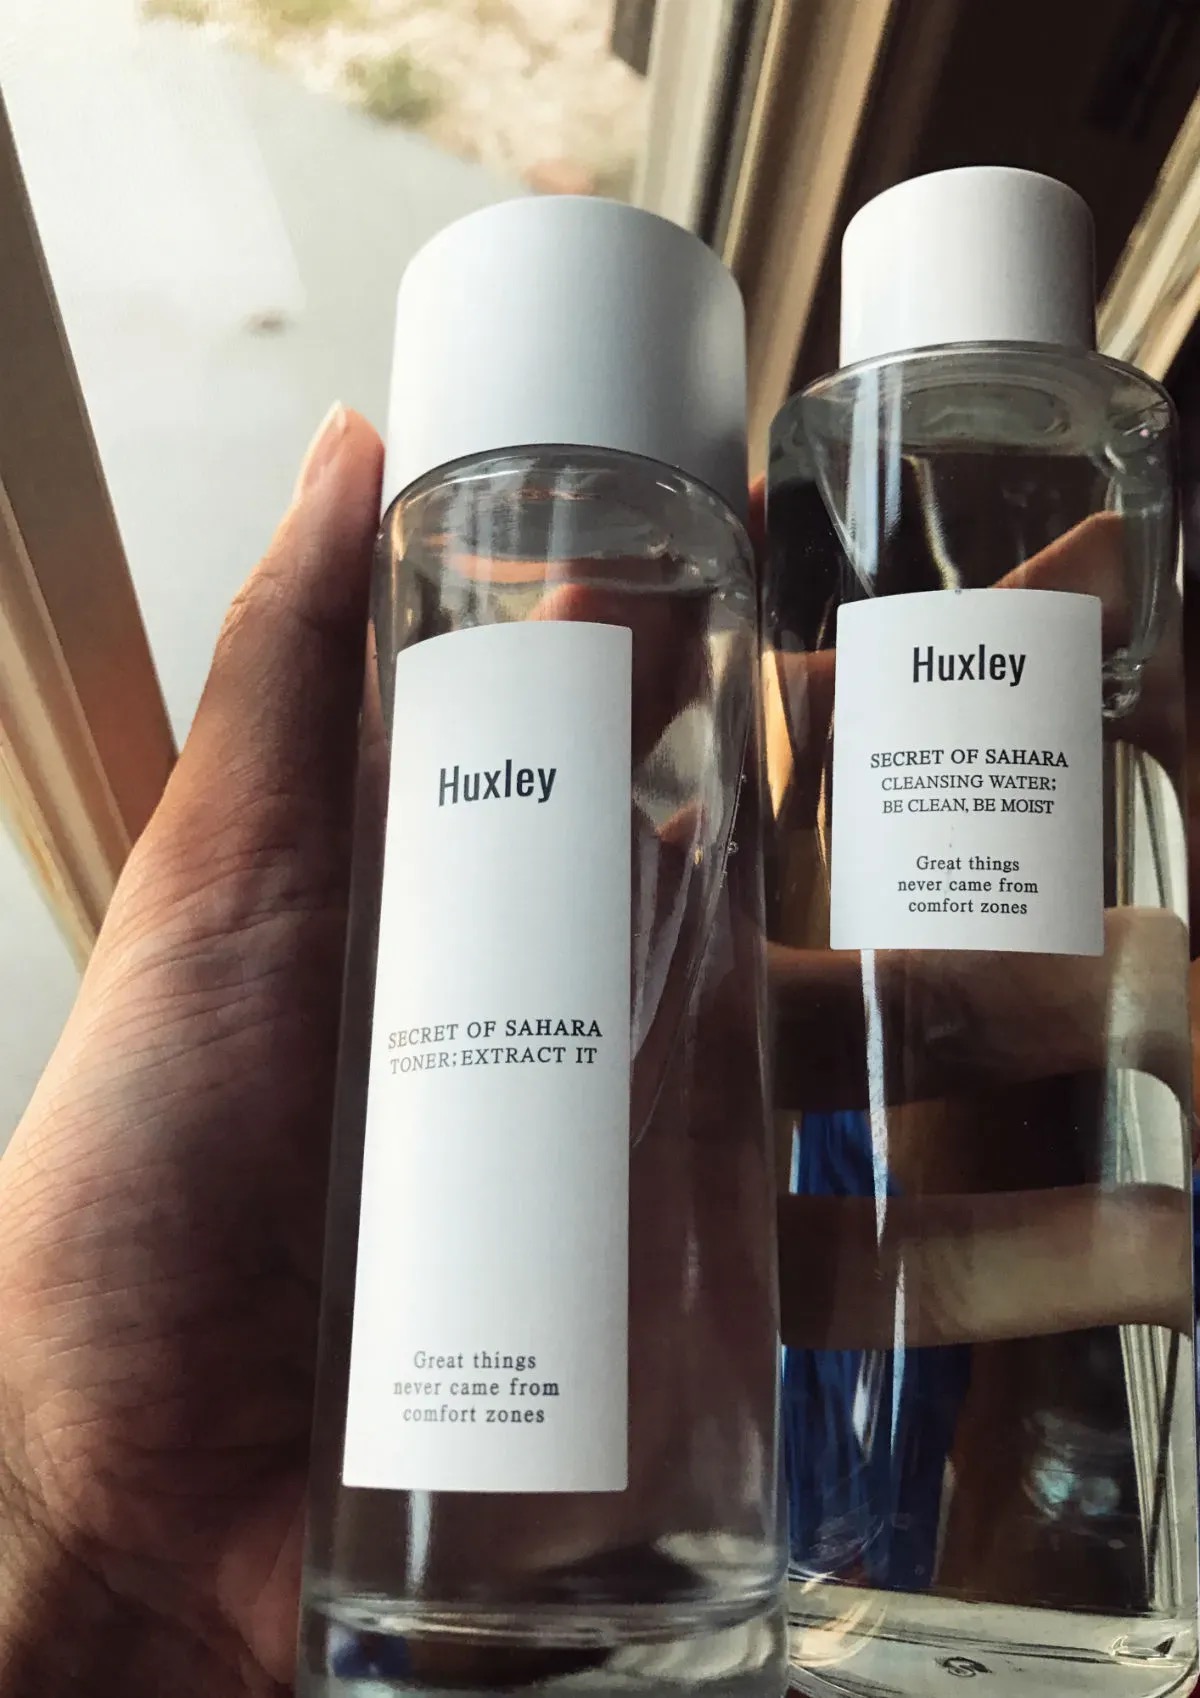 Huxley Cream Fresh and More – Korean-Skincare